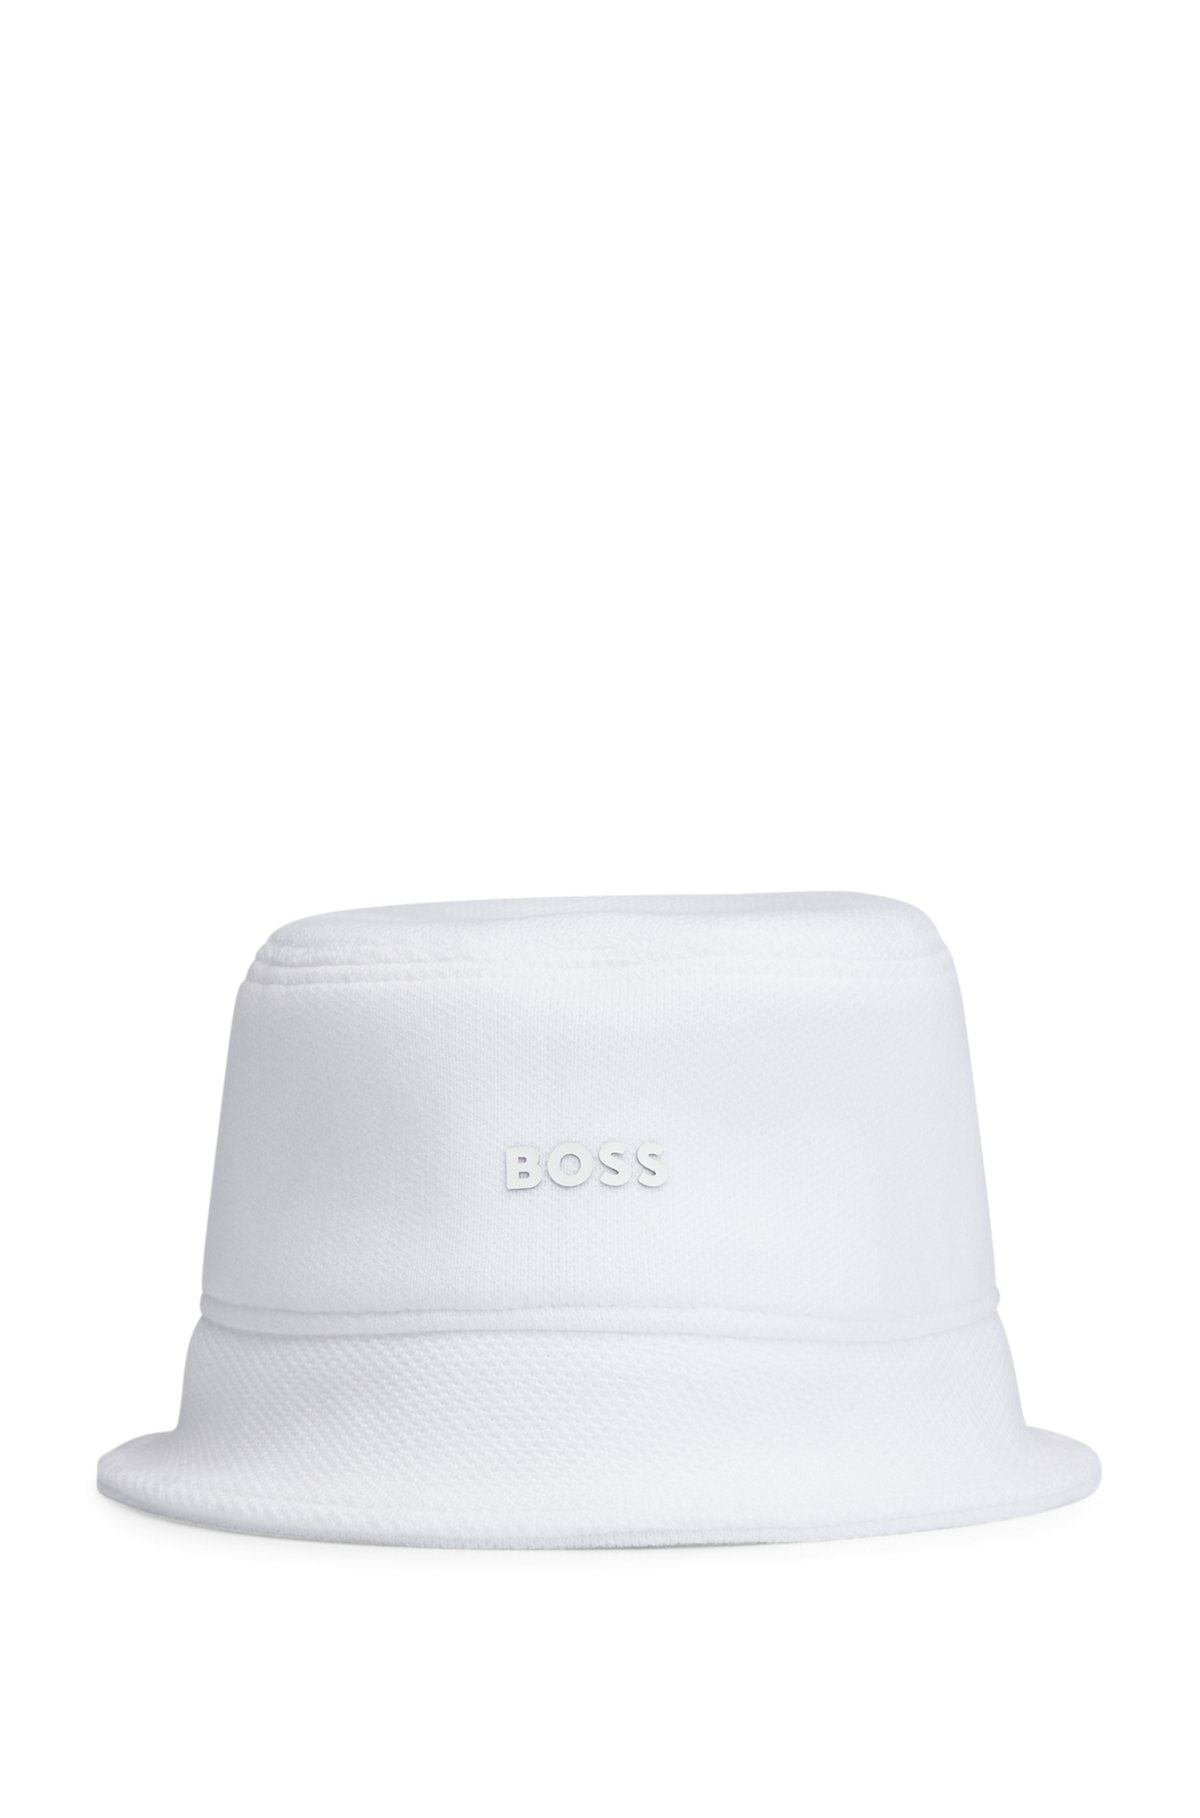 BOSS Cotton-piqu bucket hat with logo detail in White | Men's Accessories size SM